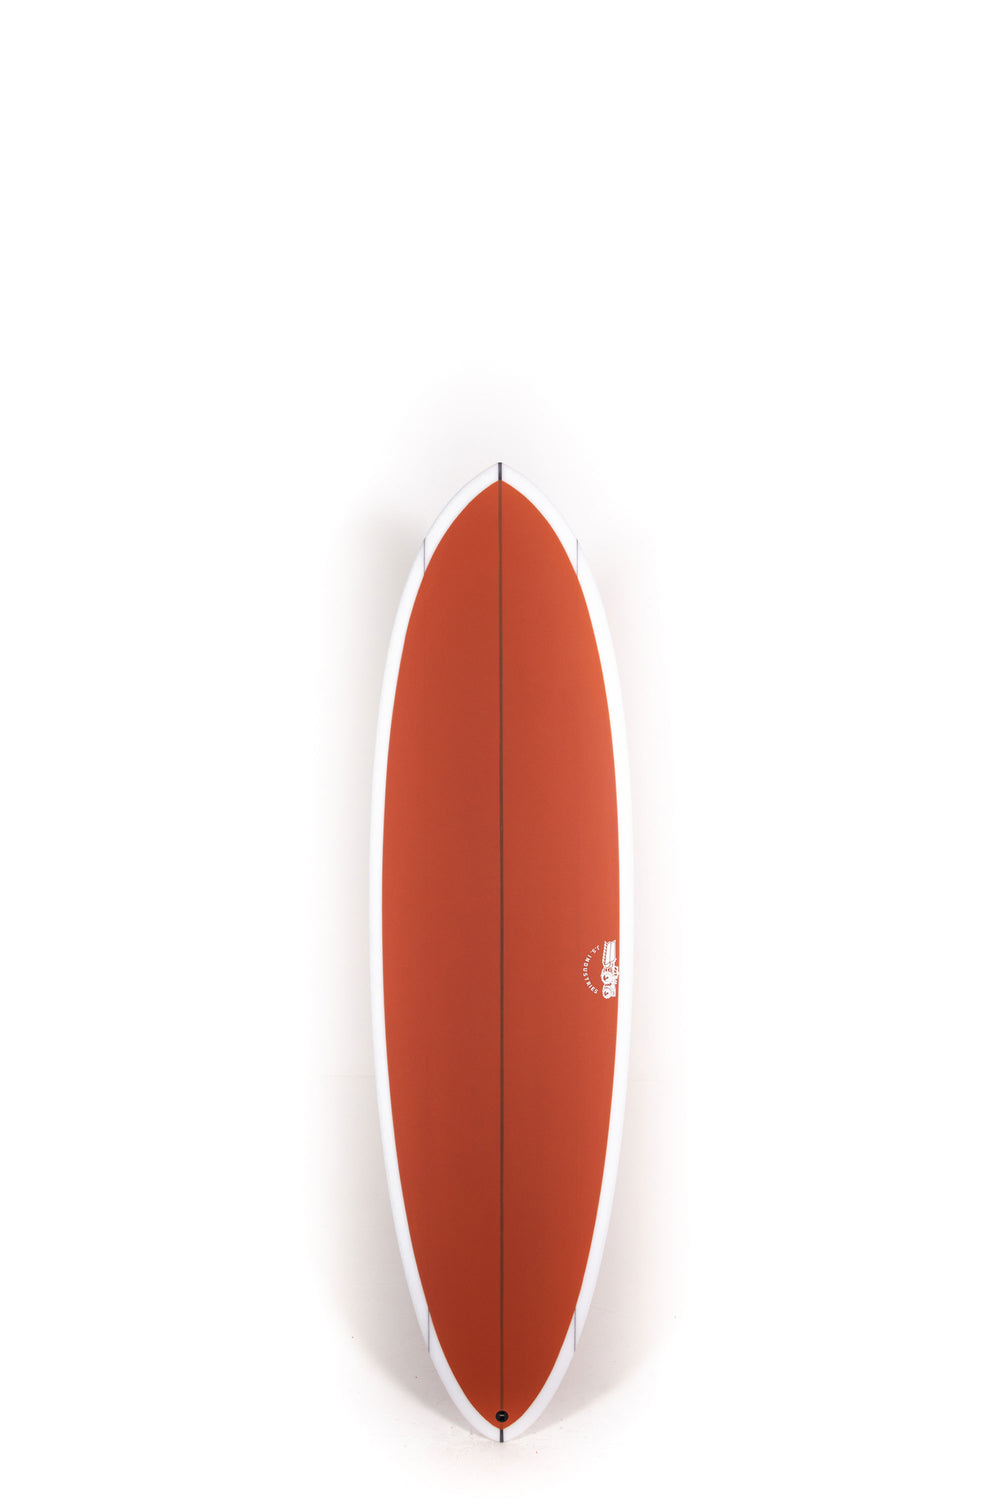 Pukas Surf Shop - JS Surfboards - BIG BARON - 6'2